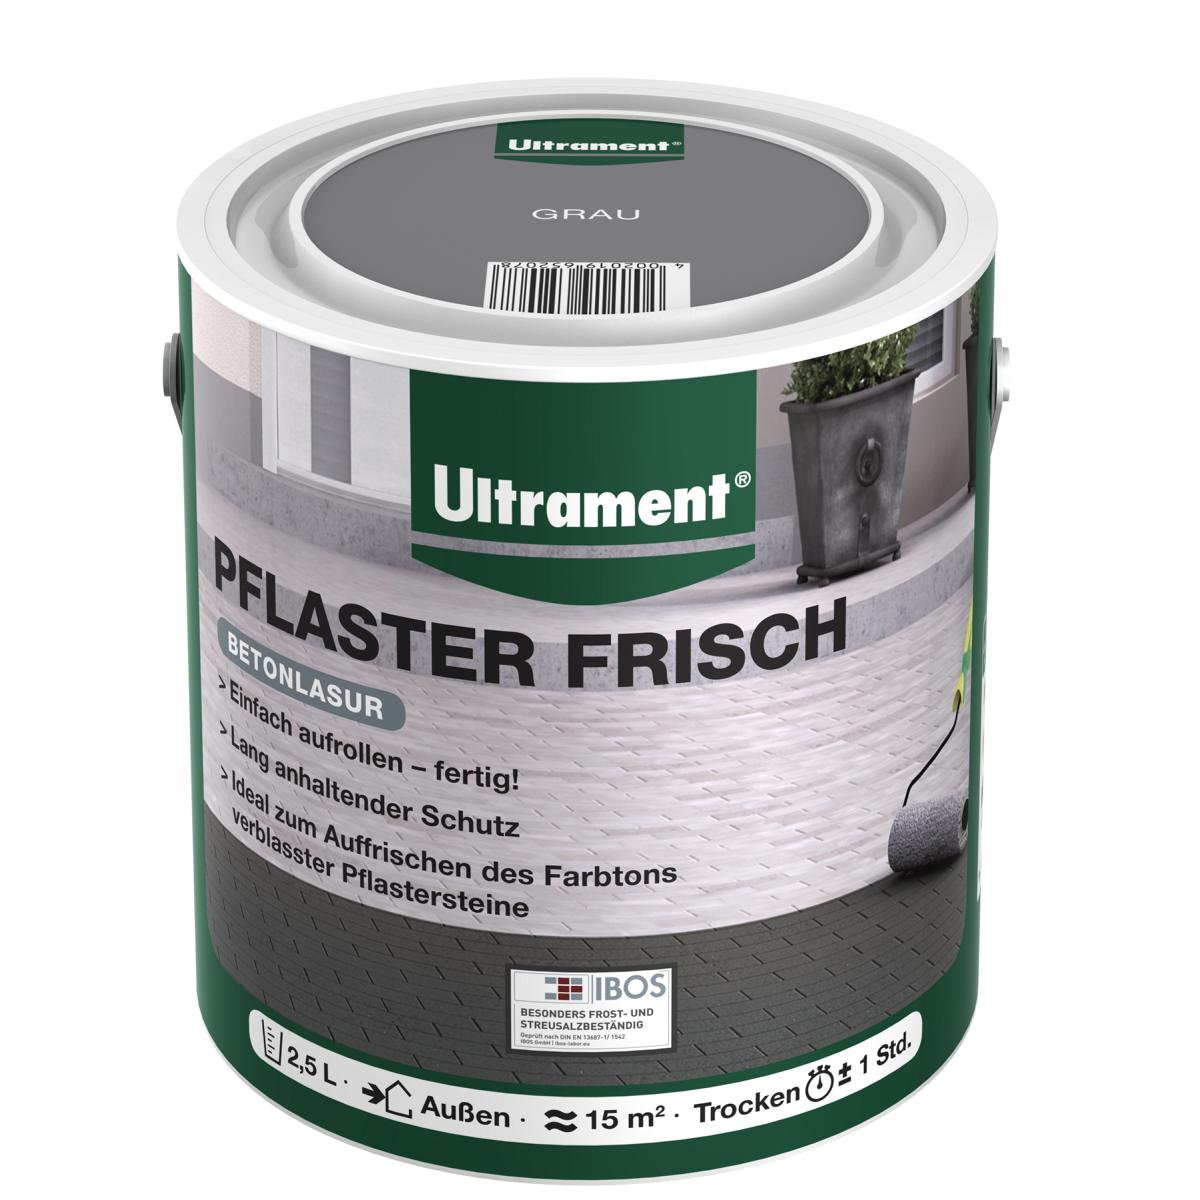 Ultrament Pflaster Frisch grau, 2,5L